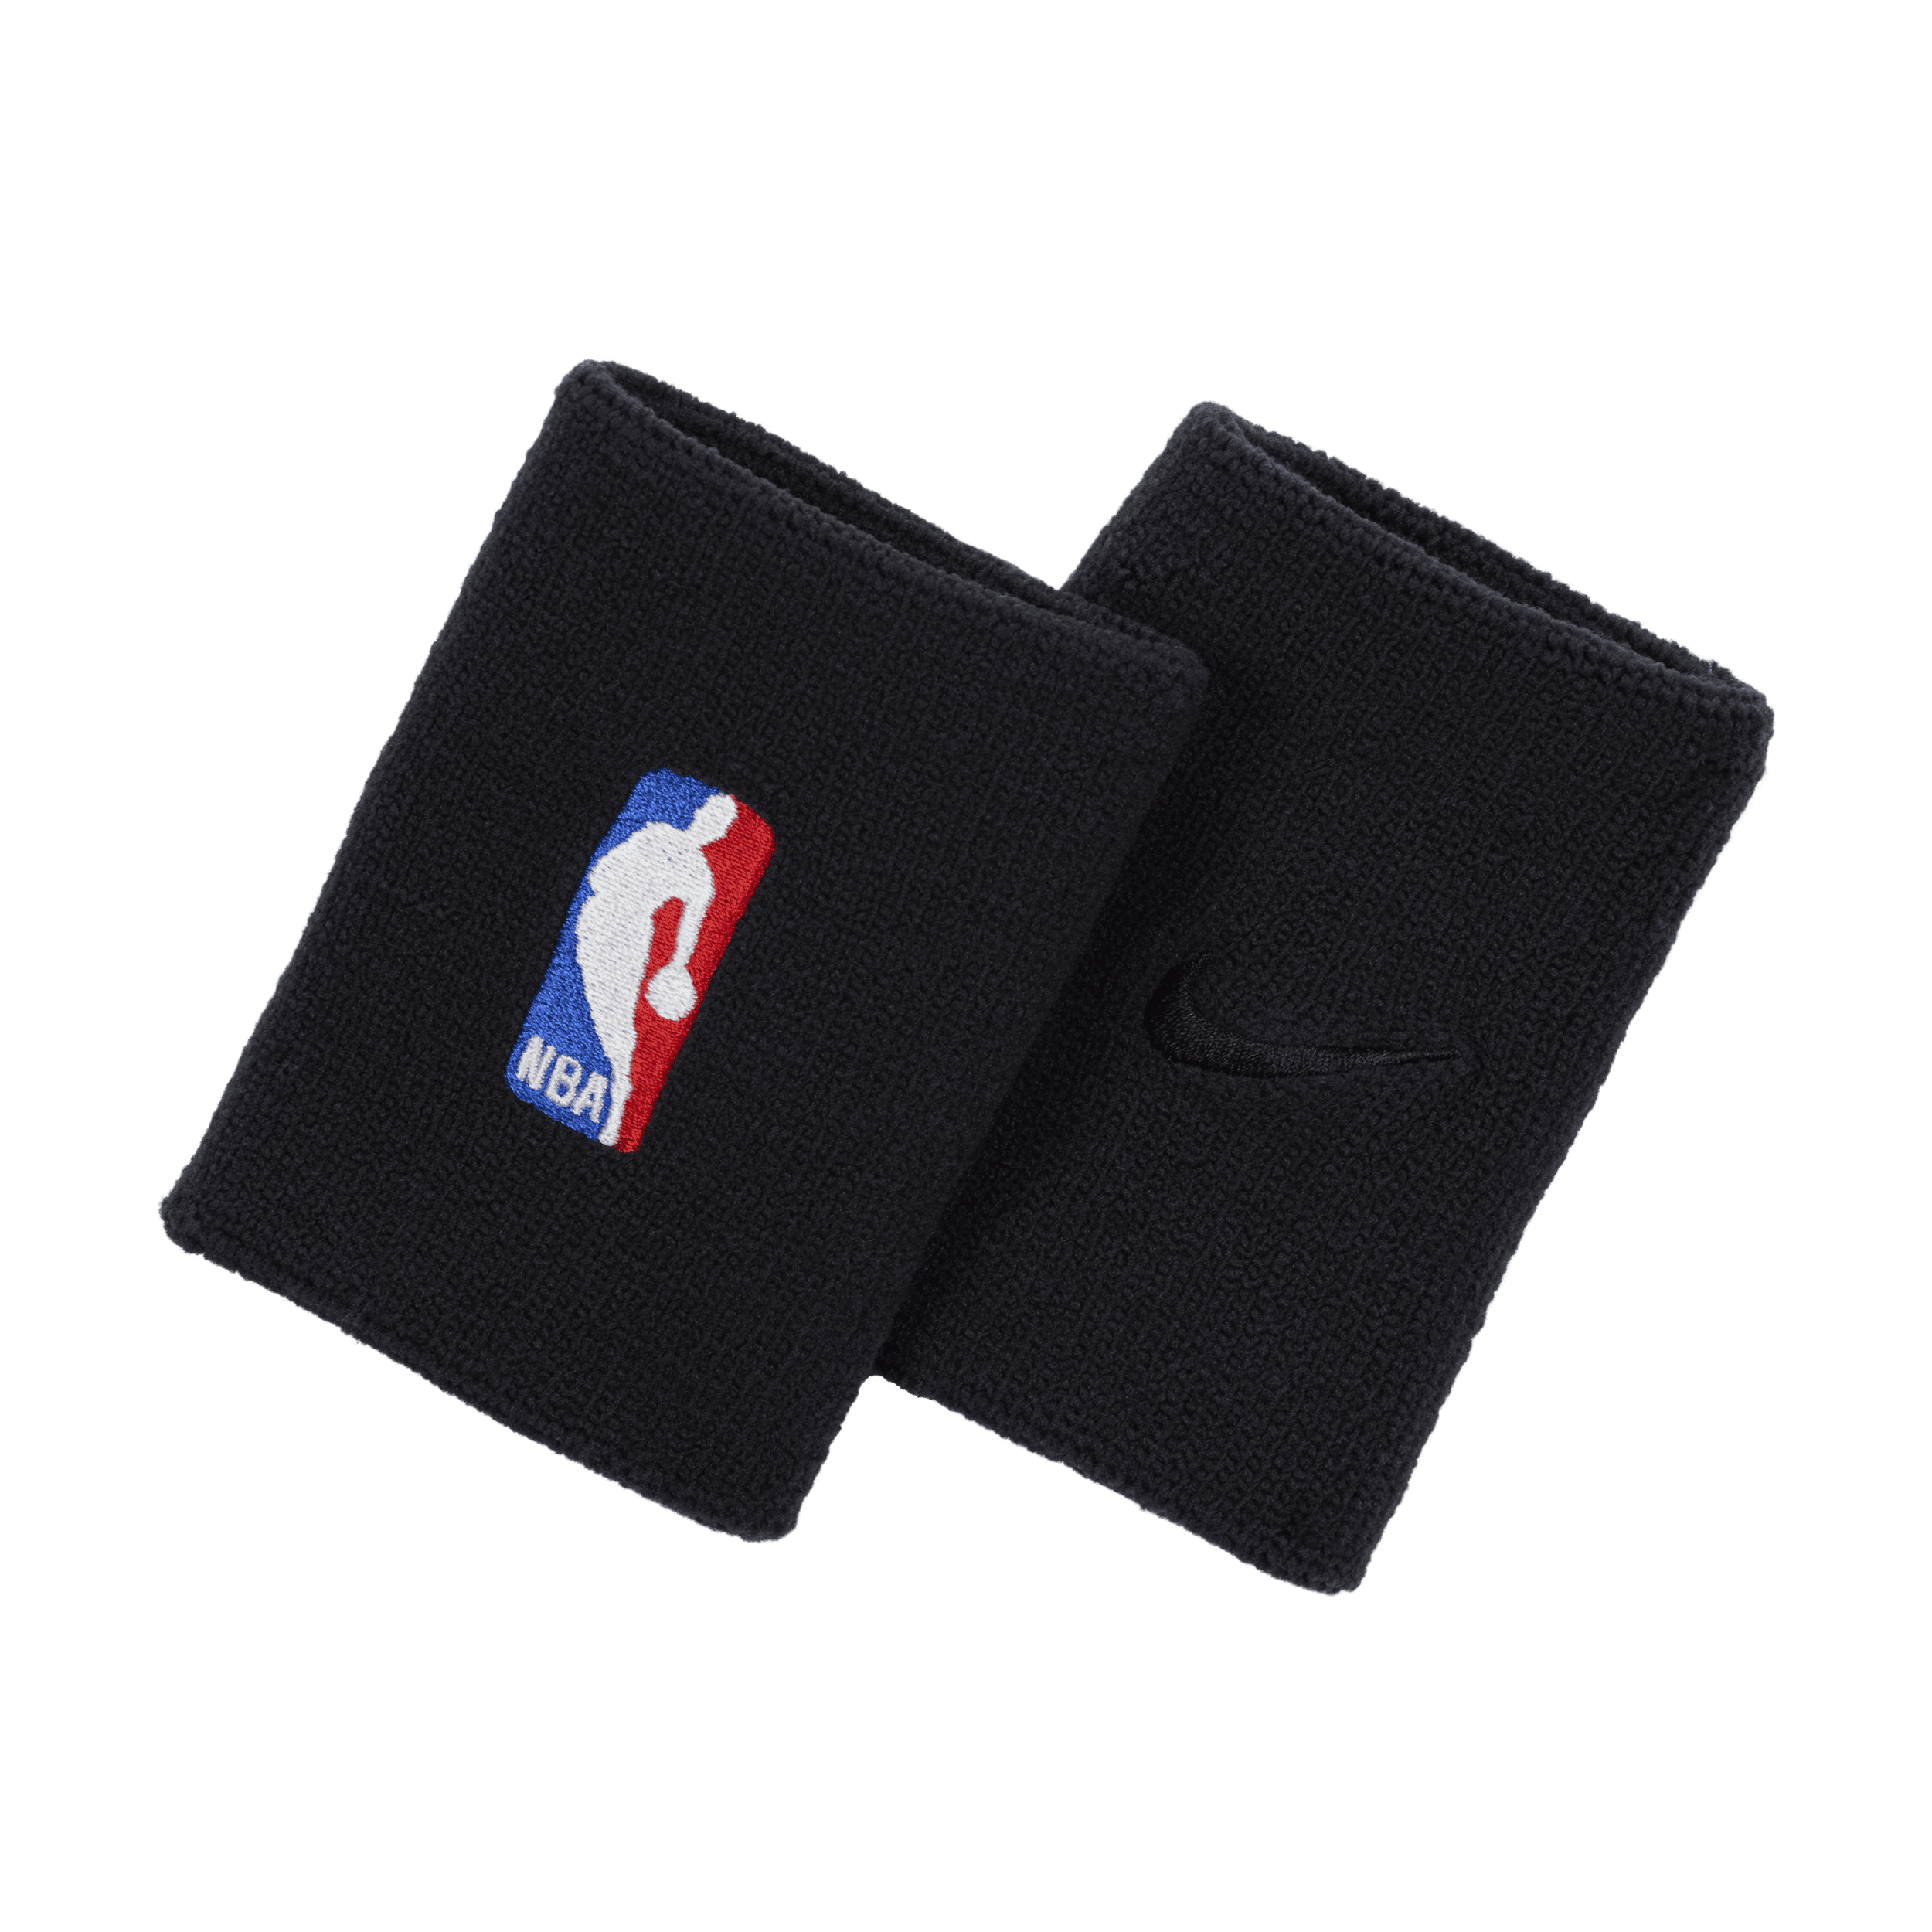 NBA Nike Dri-FIT polsbandjes voor basketbal (1 paar) - Zwart